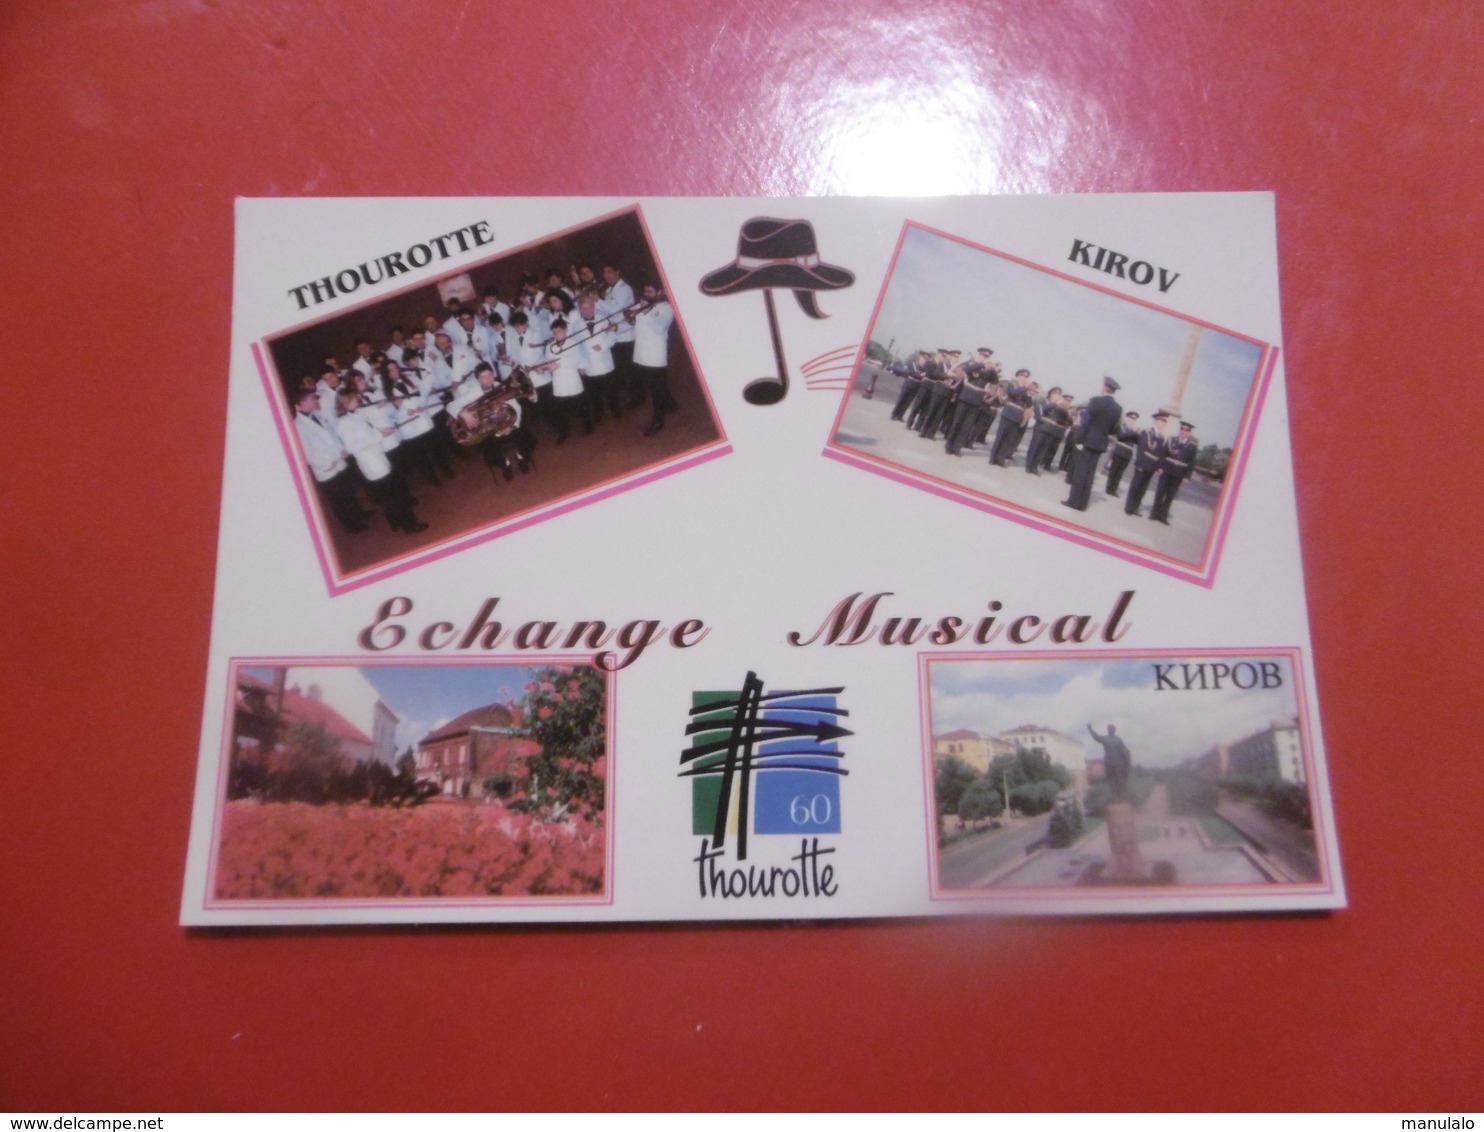 D 60 - Thourotte - Kirov - échange Musical - Thourotte